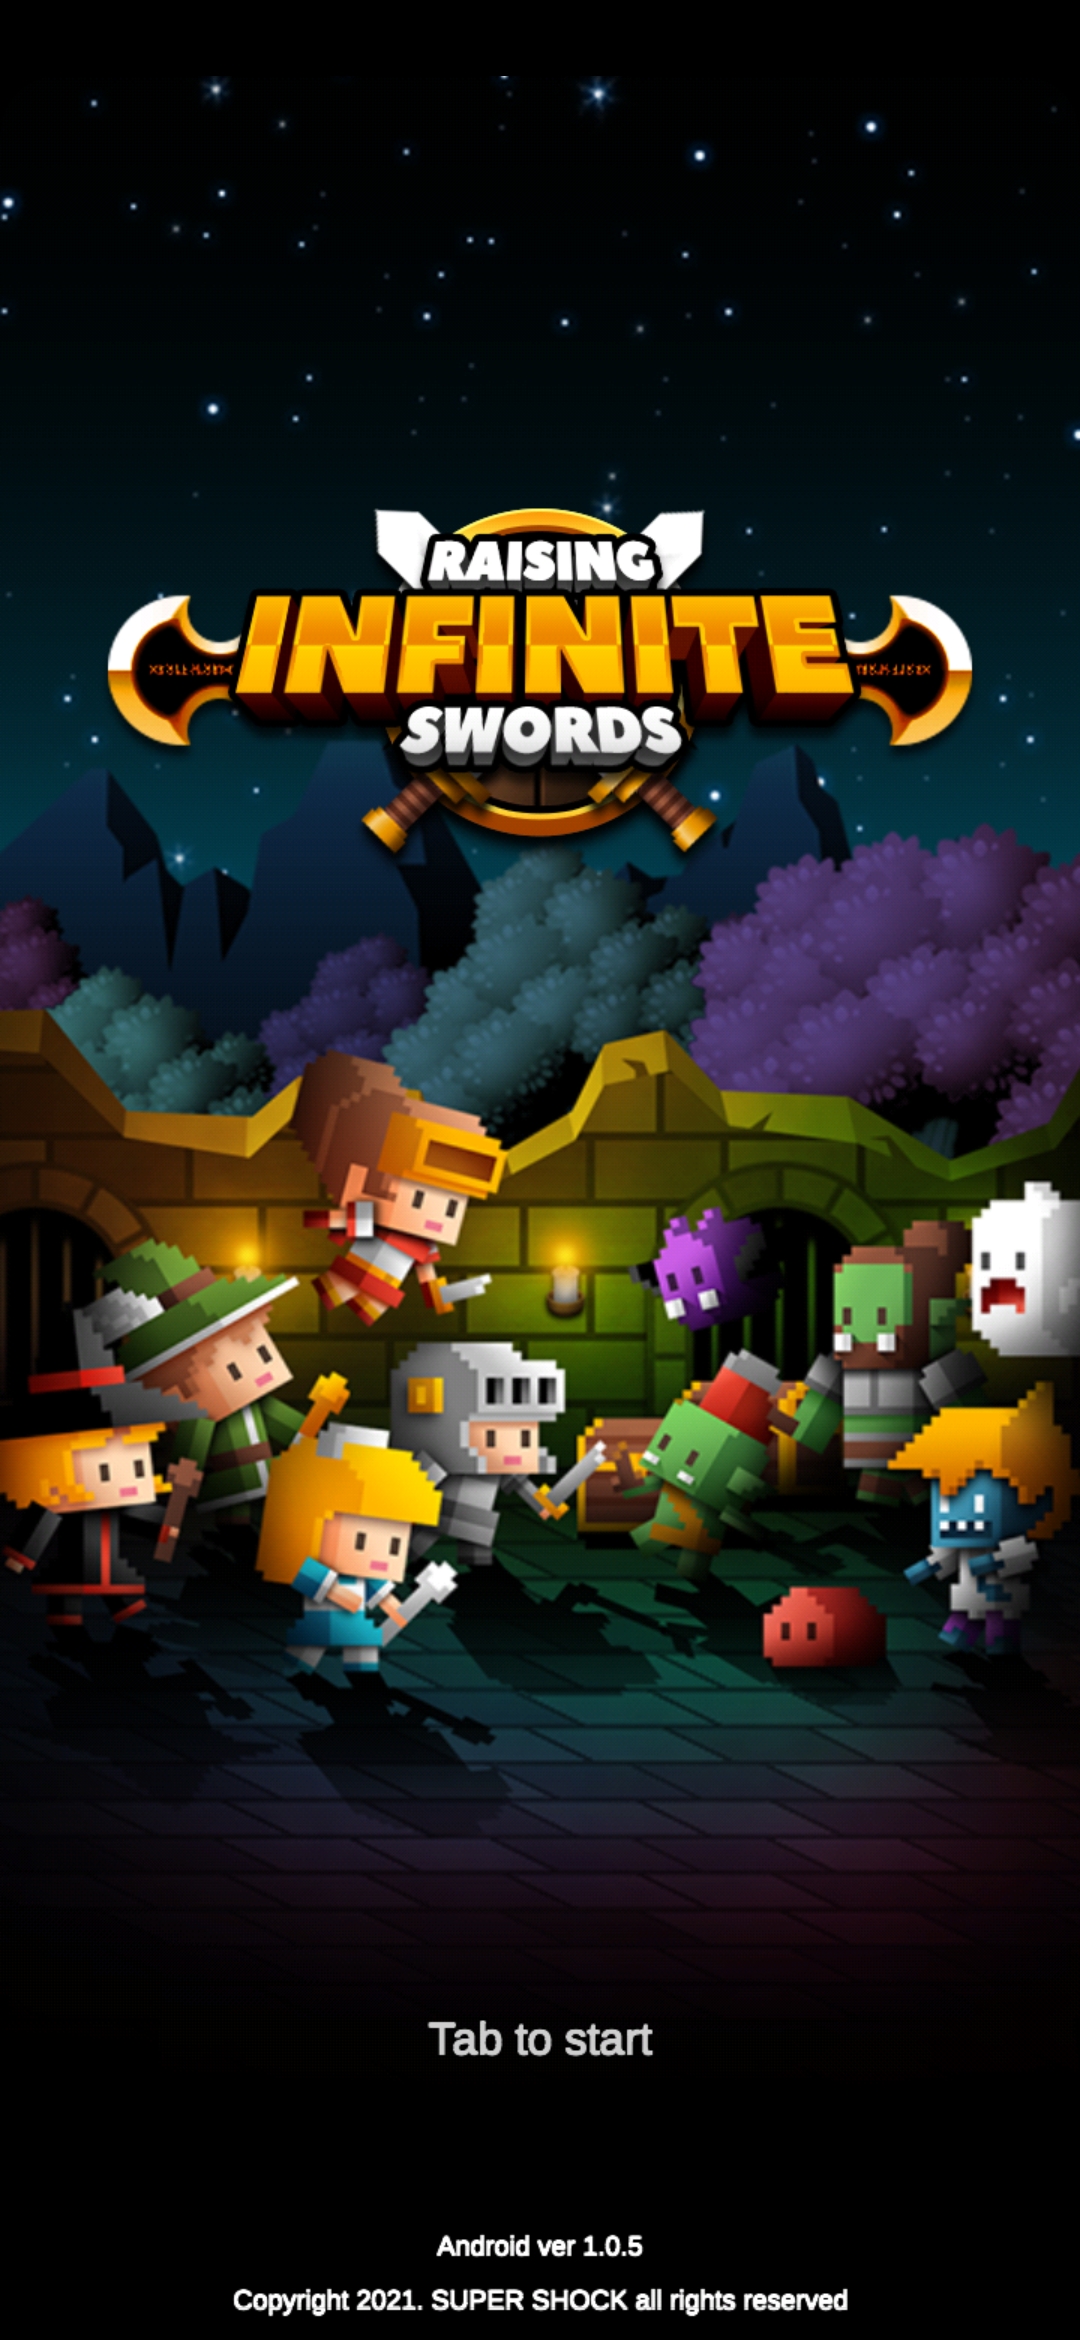 [Game Android] Raising Infinite Swords